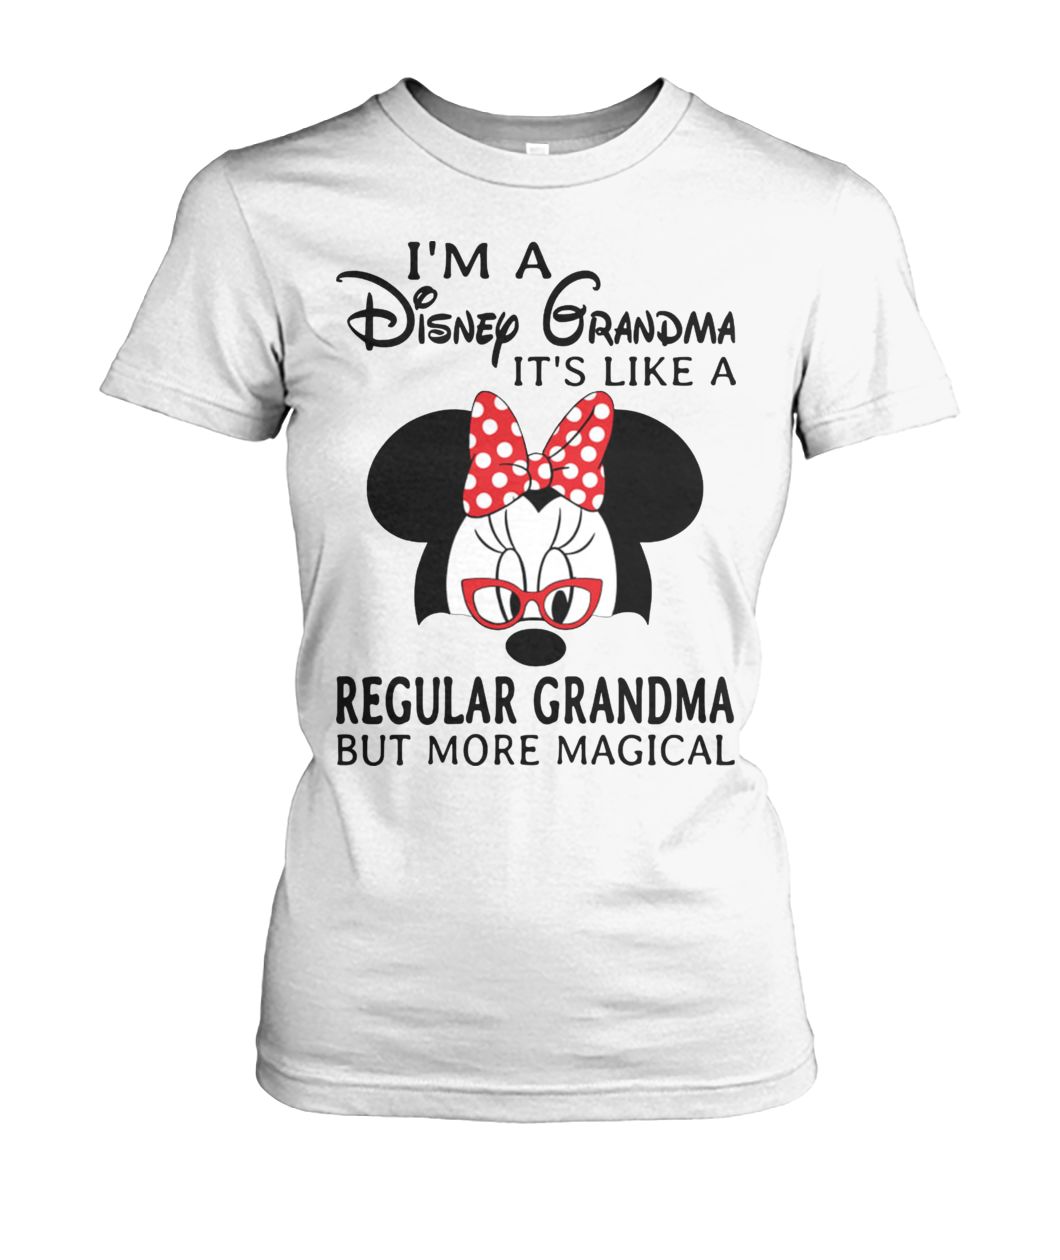 I'm a disney grandma it's like a regular grandma but more magical women's crew tee